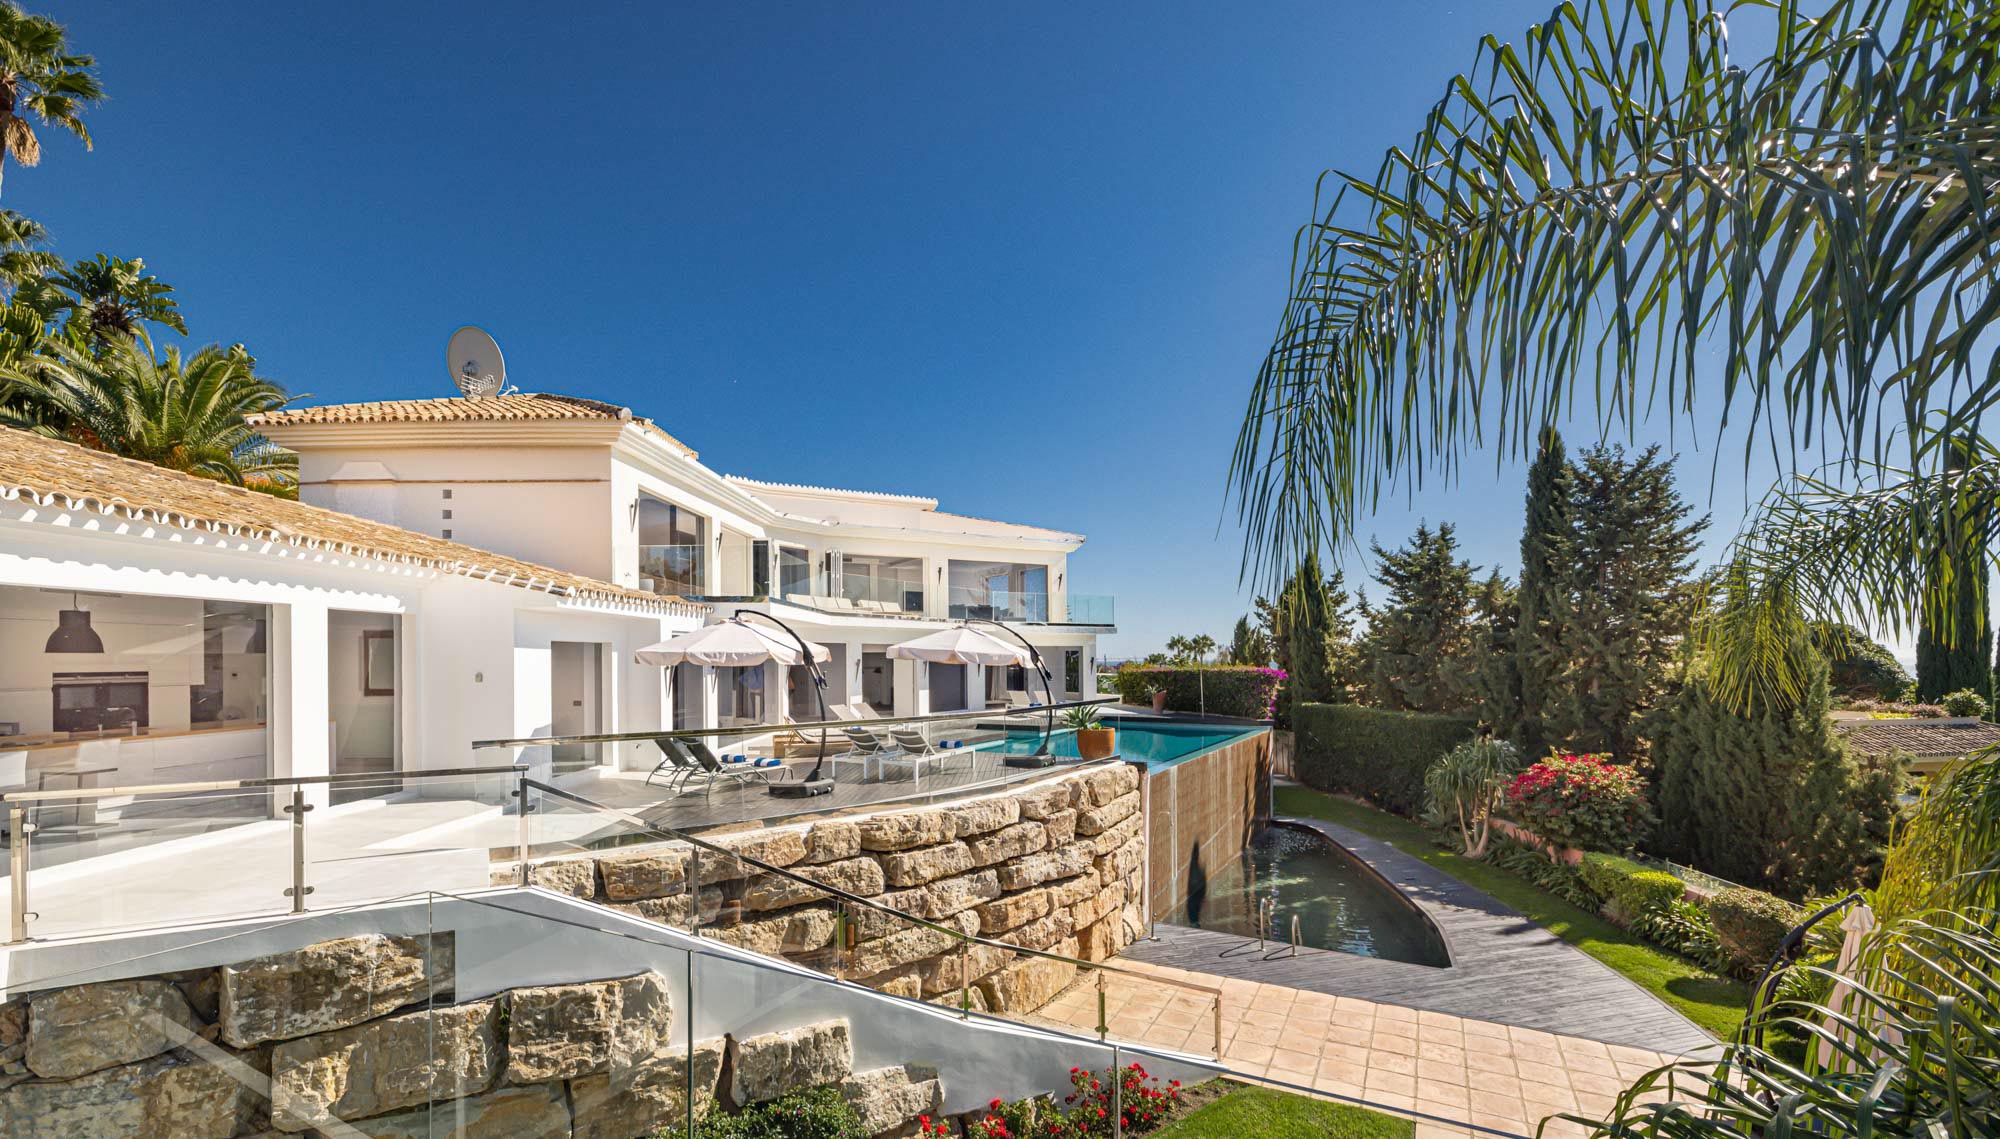 Villa Ibizenco Luxury Designer Villa Marbella